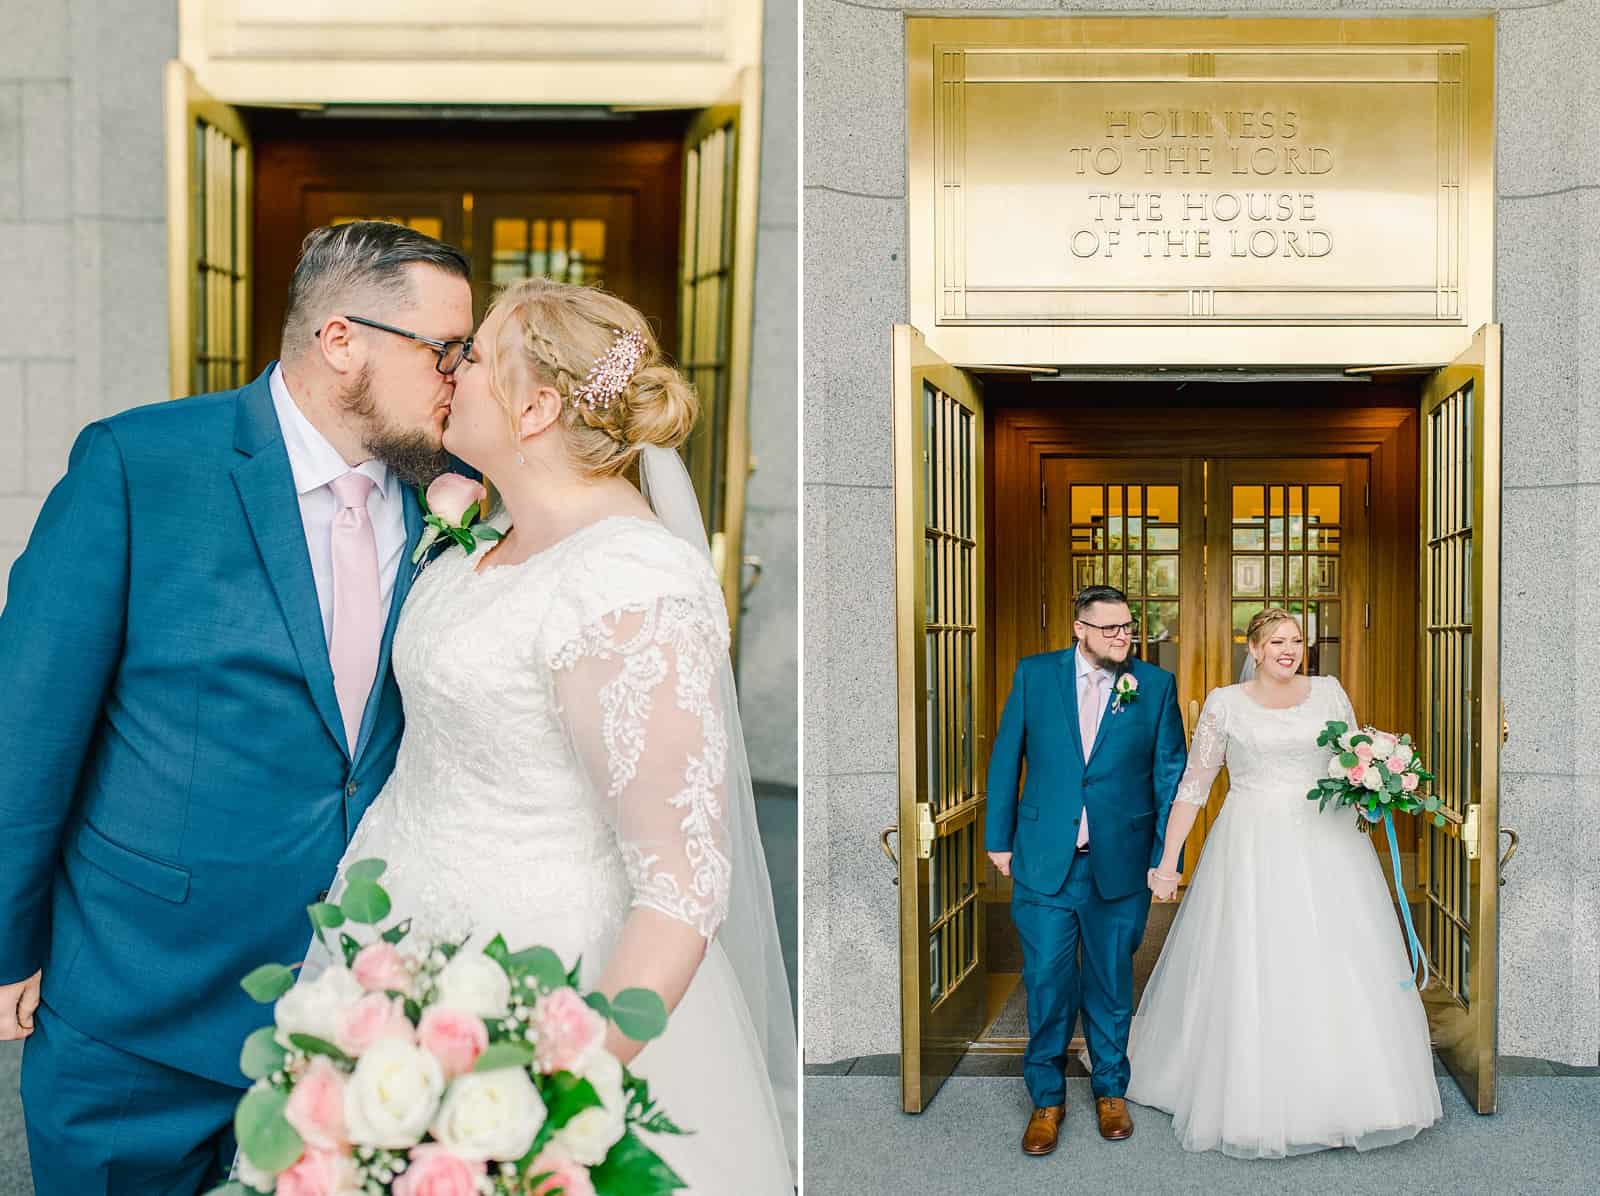 Draper LDS Temple Wedding, Utah wedding photography, summer backyard wedding, bride and groom exit gold doors